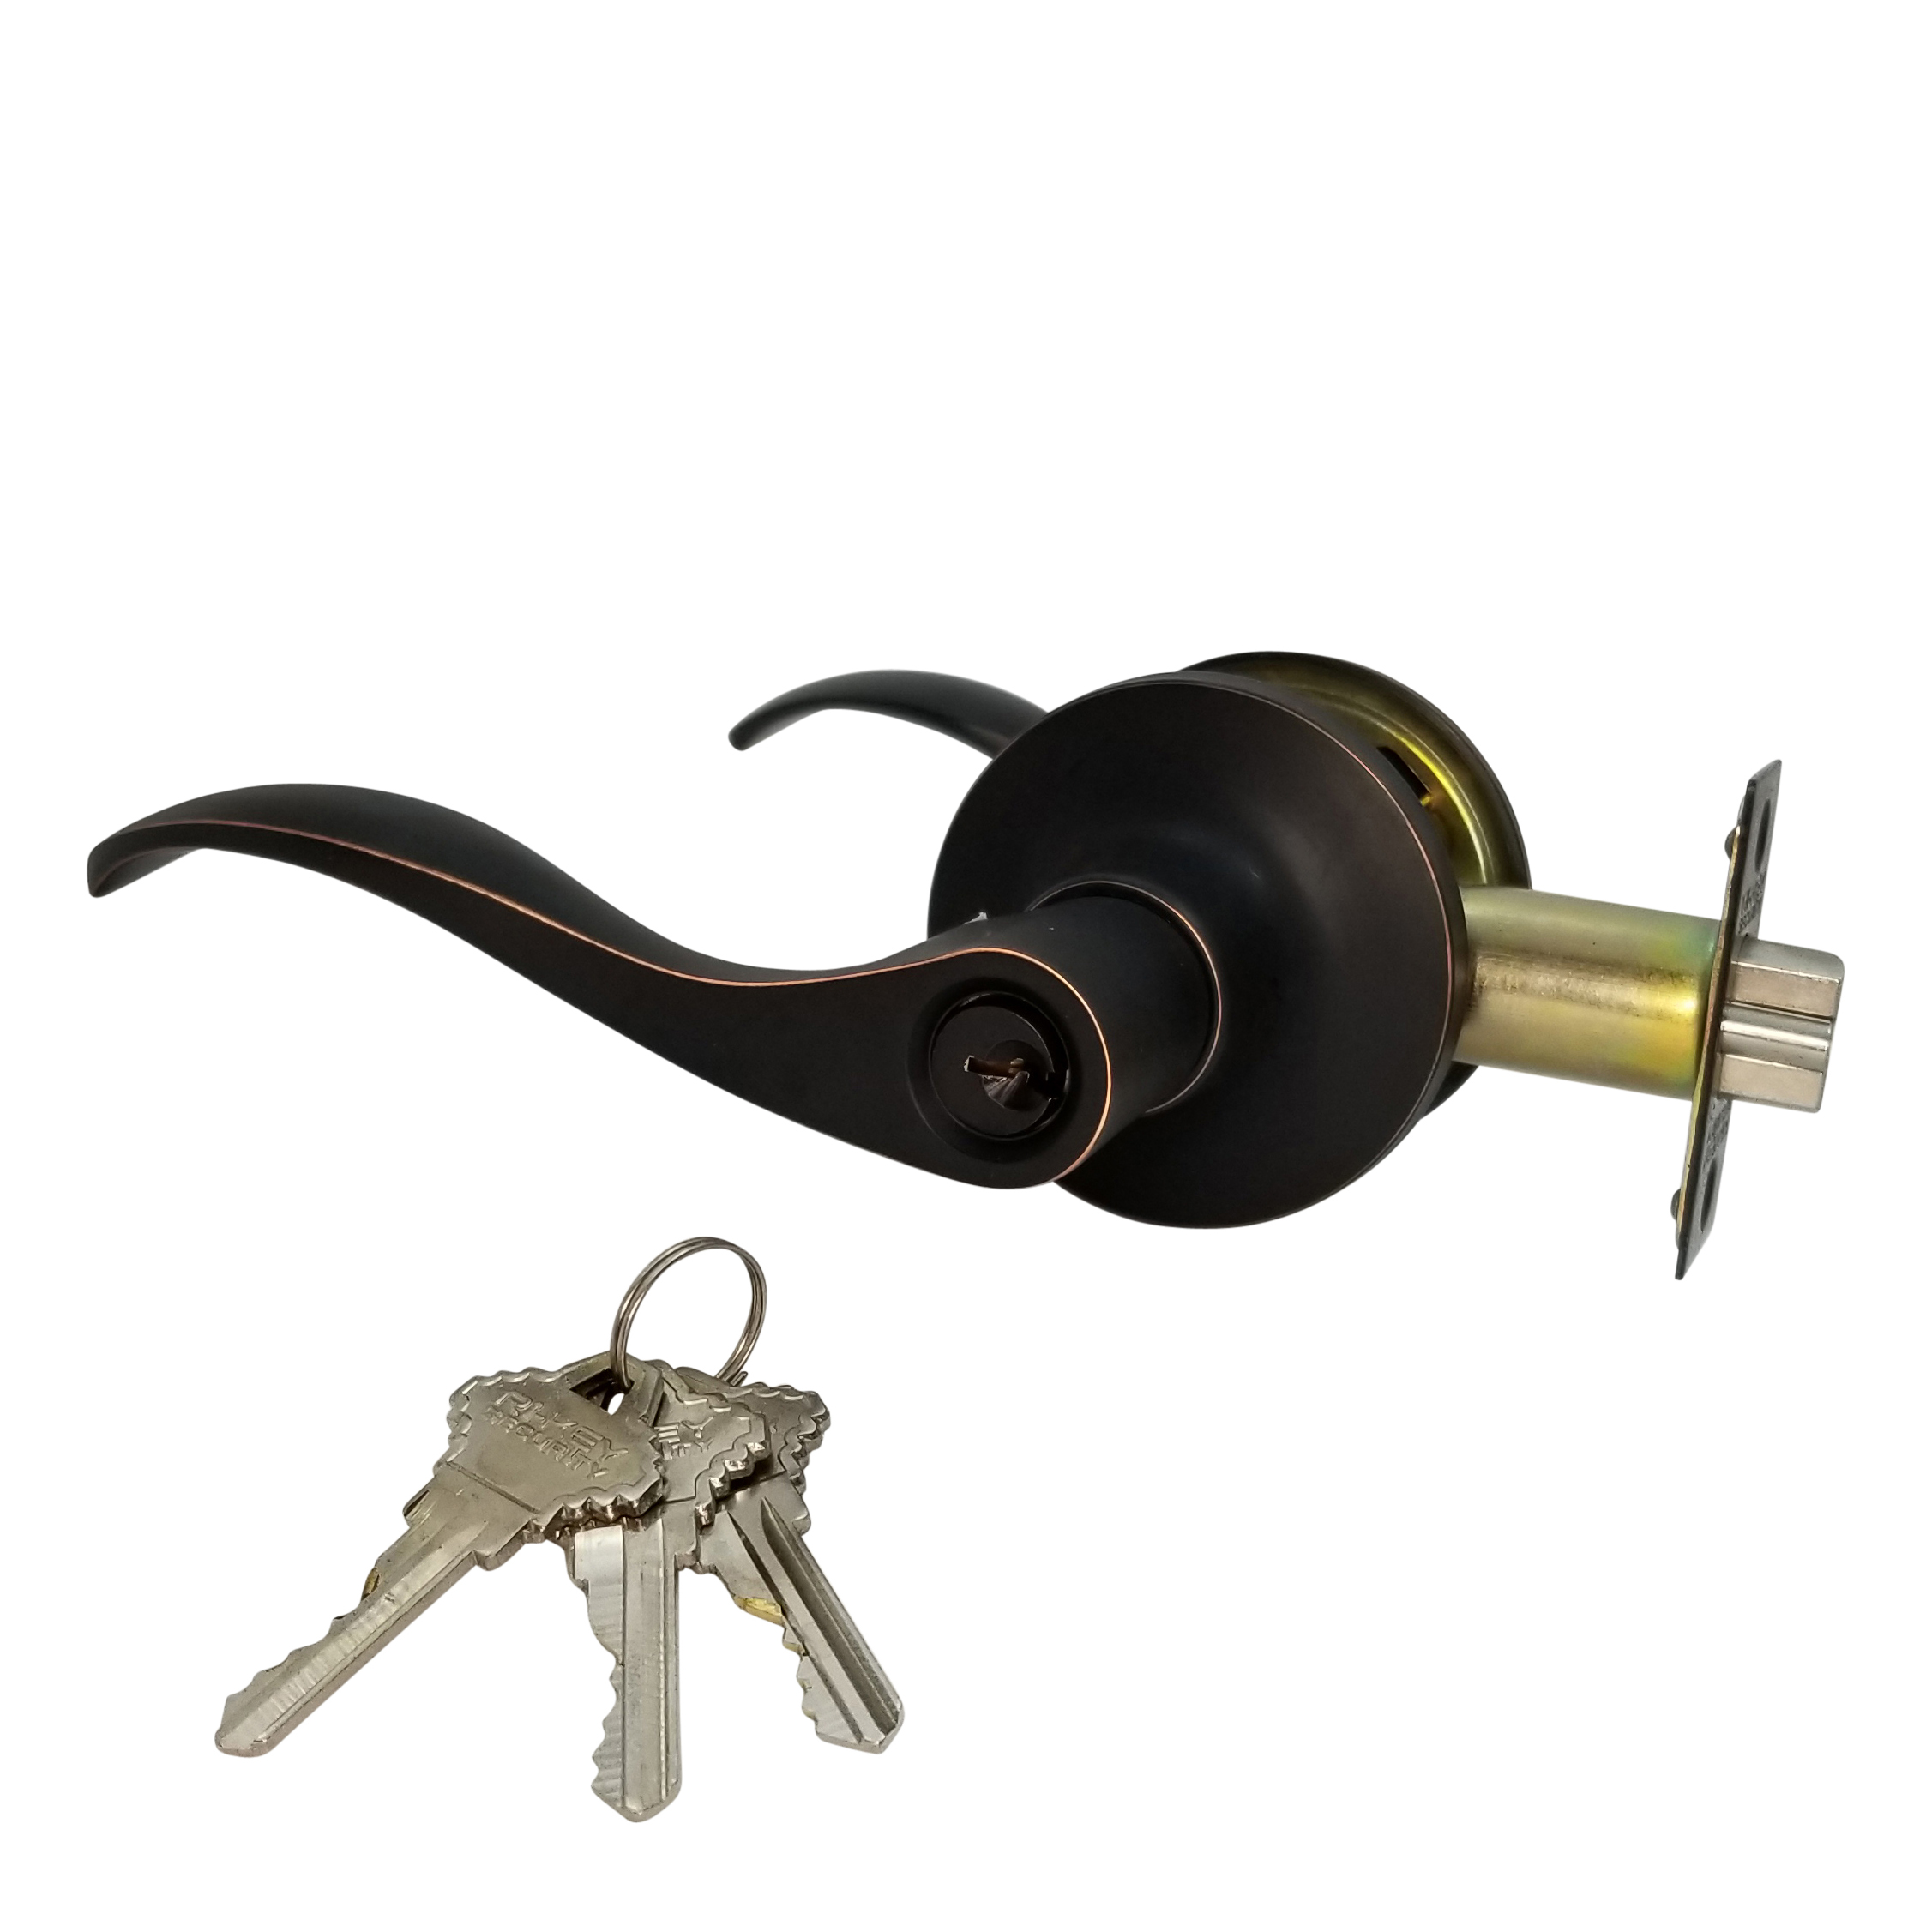 RI-KEY SECURITY Lever Door Lock Entry Keyed Cylinder Wave Handle 3 Keys Oil-Rub Bronze Finish SC LH - image 2 of 9